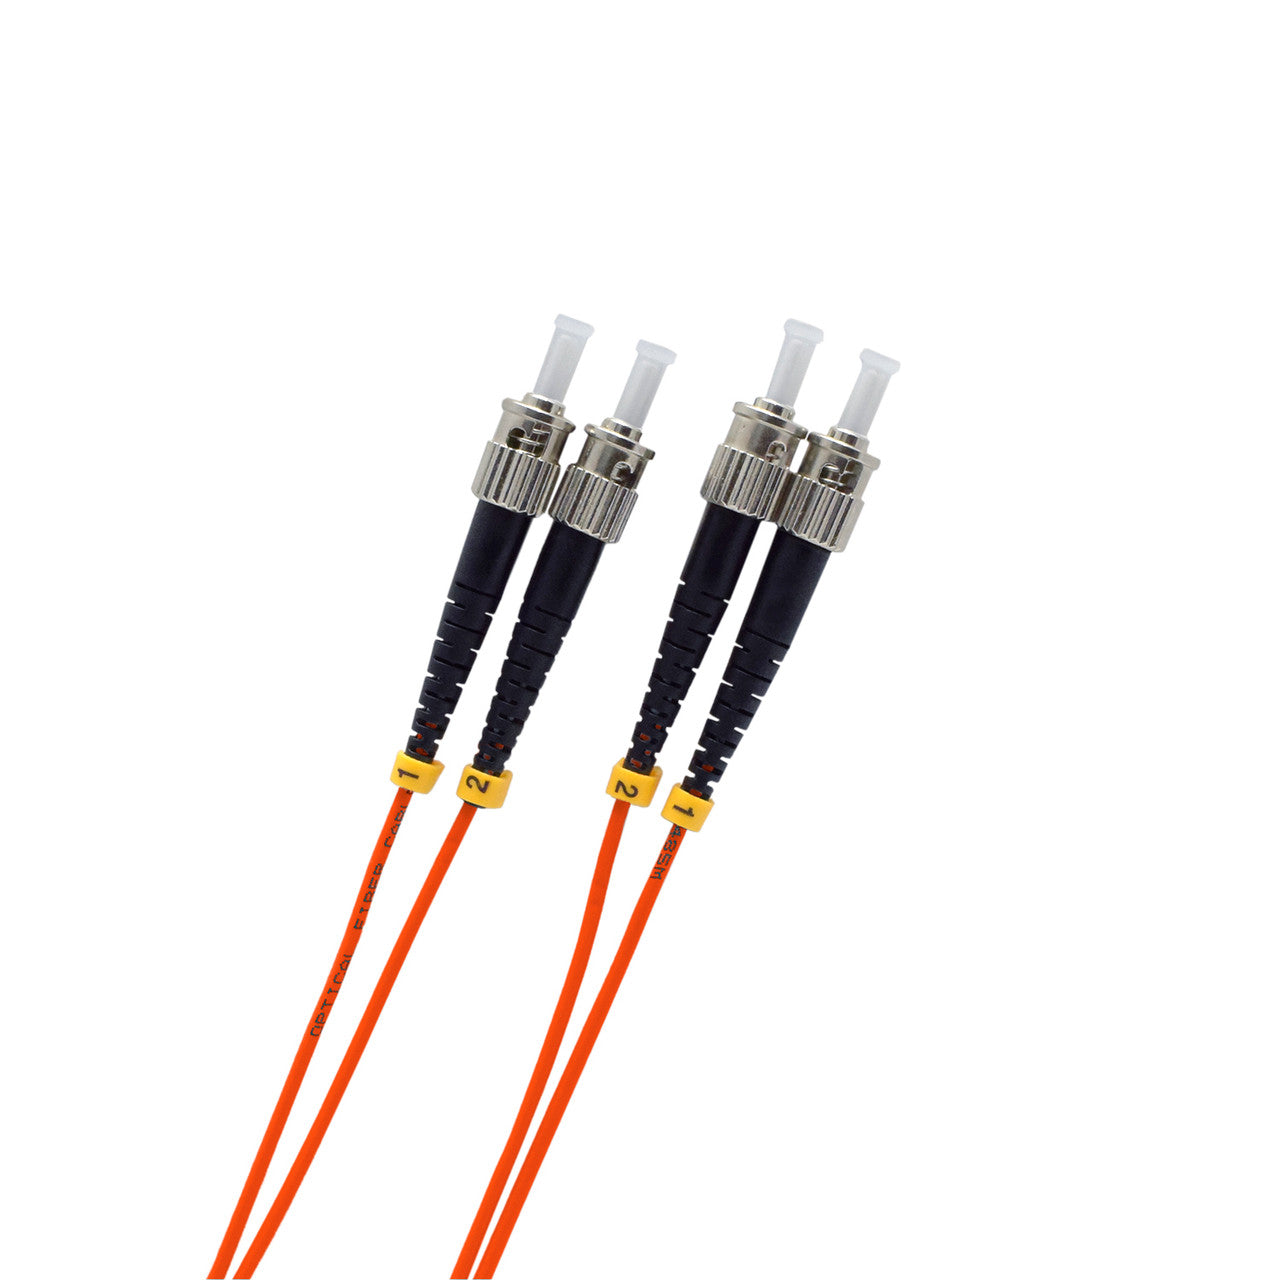 10 Meter ST/ST 62.5/125 Multimode OM1 Duplex Fiber Patch Cable